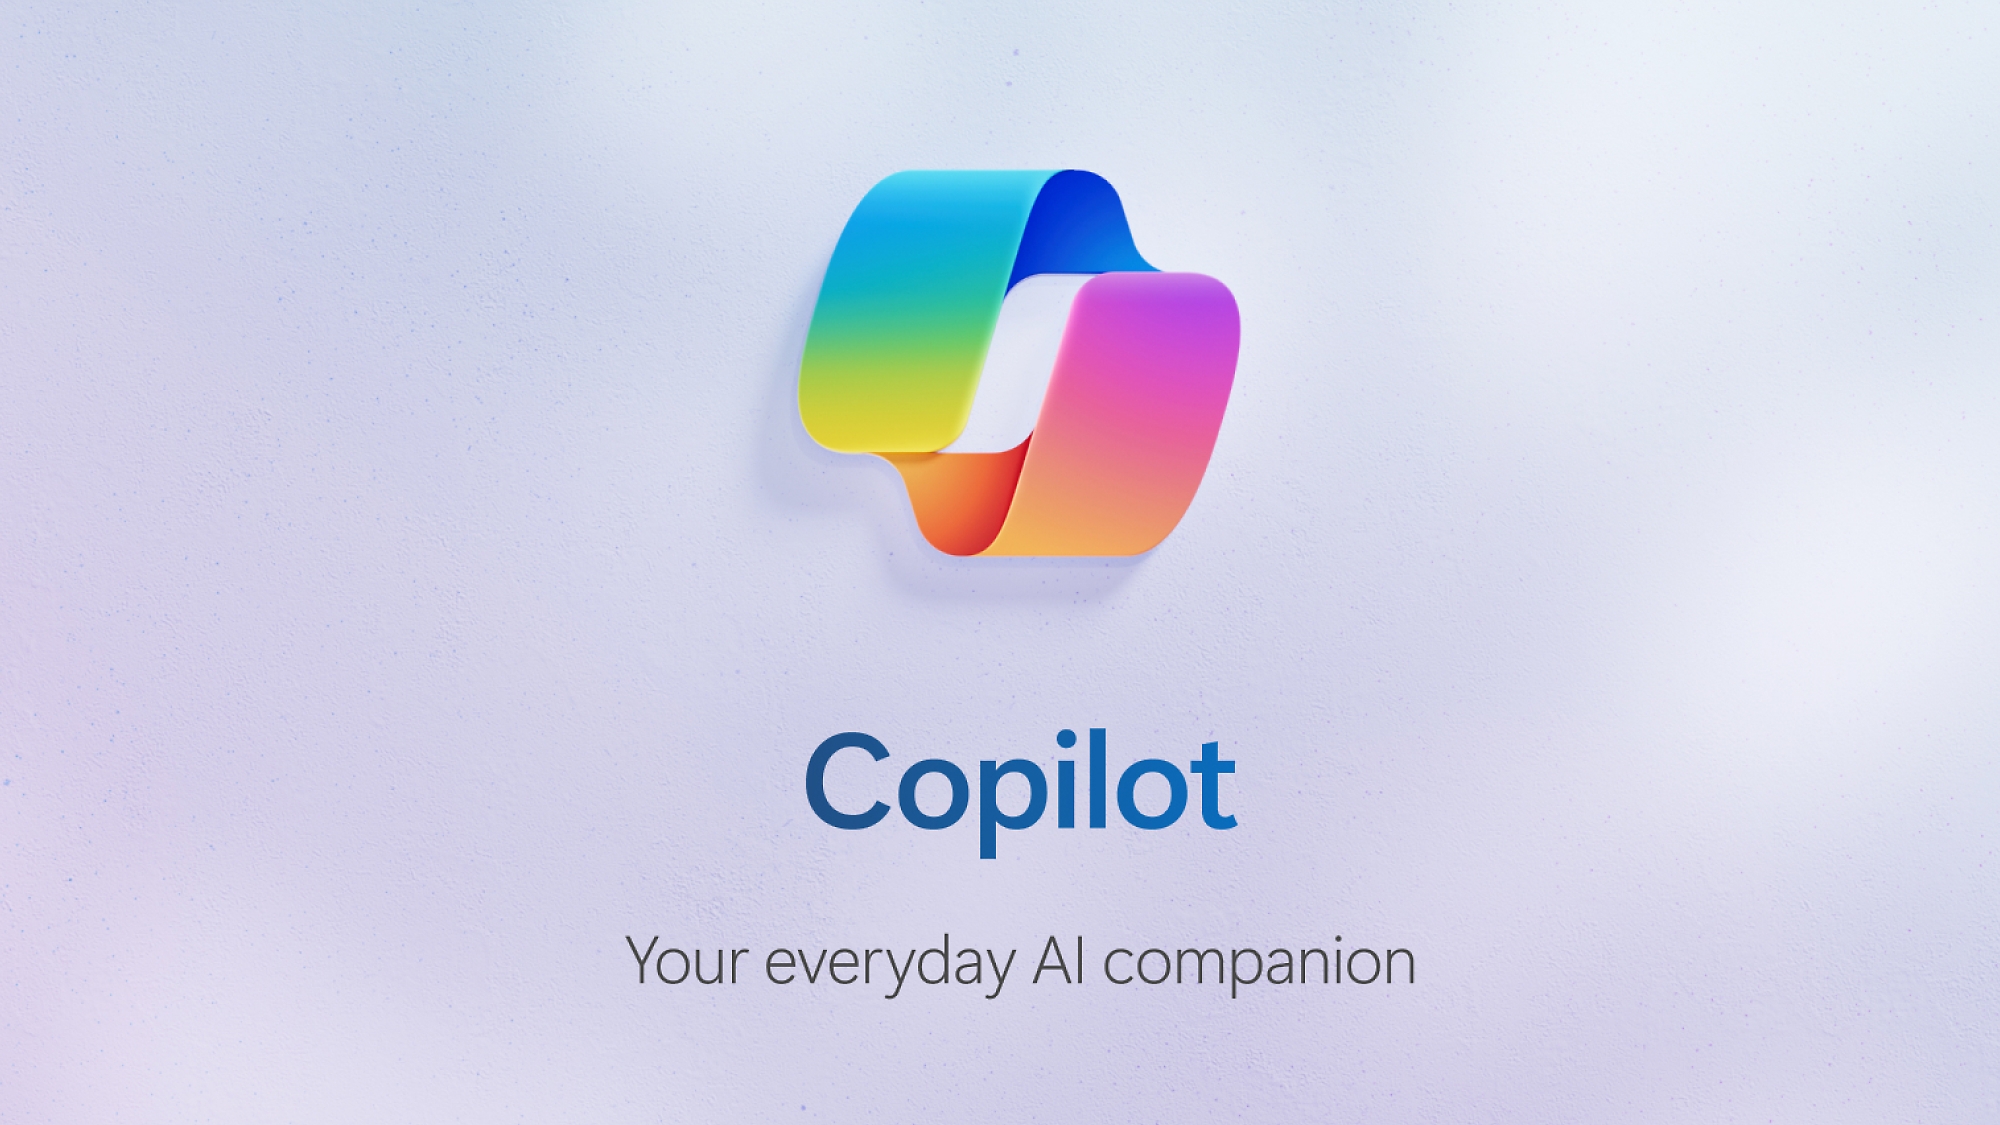 Videominiature til Copilot-video med copilot-logoet